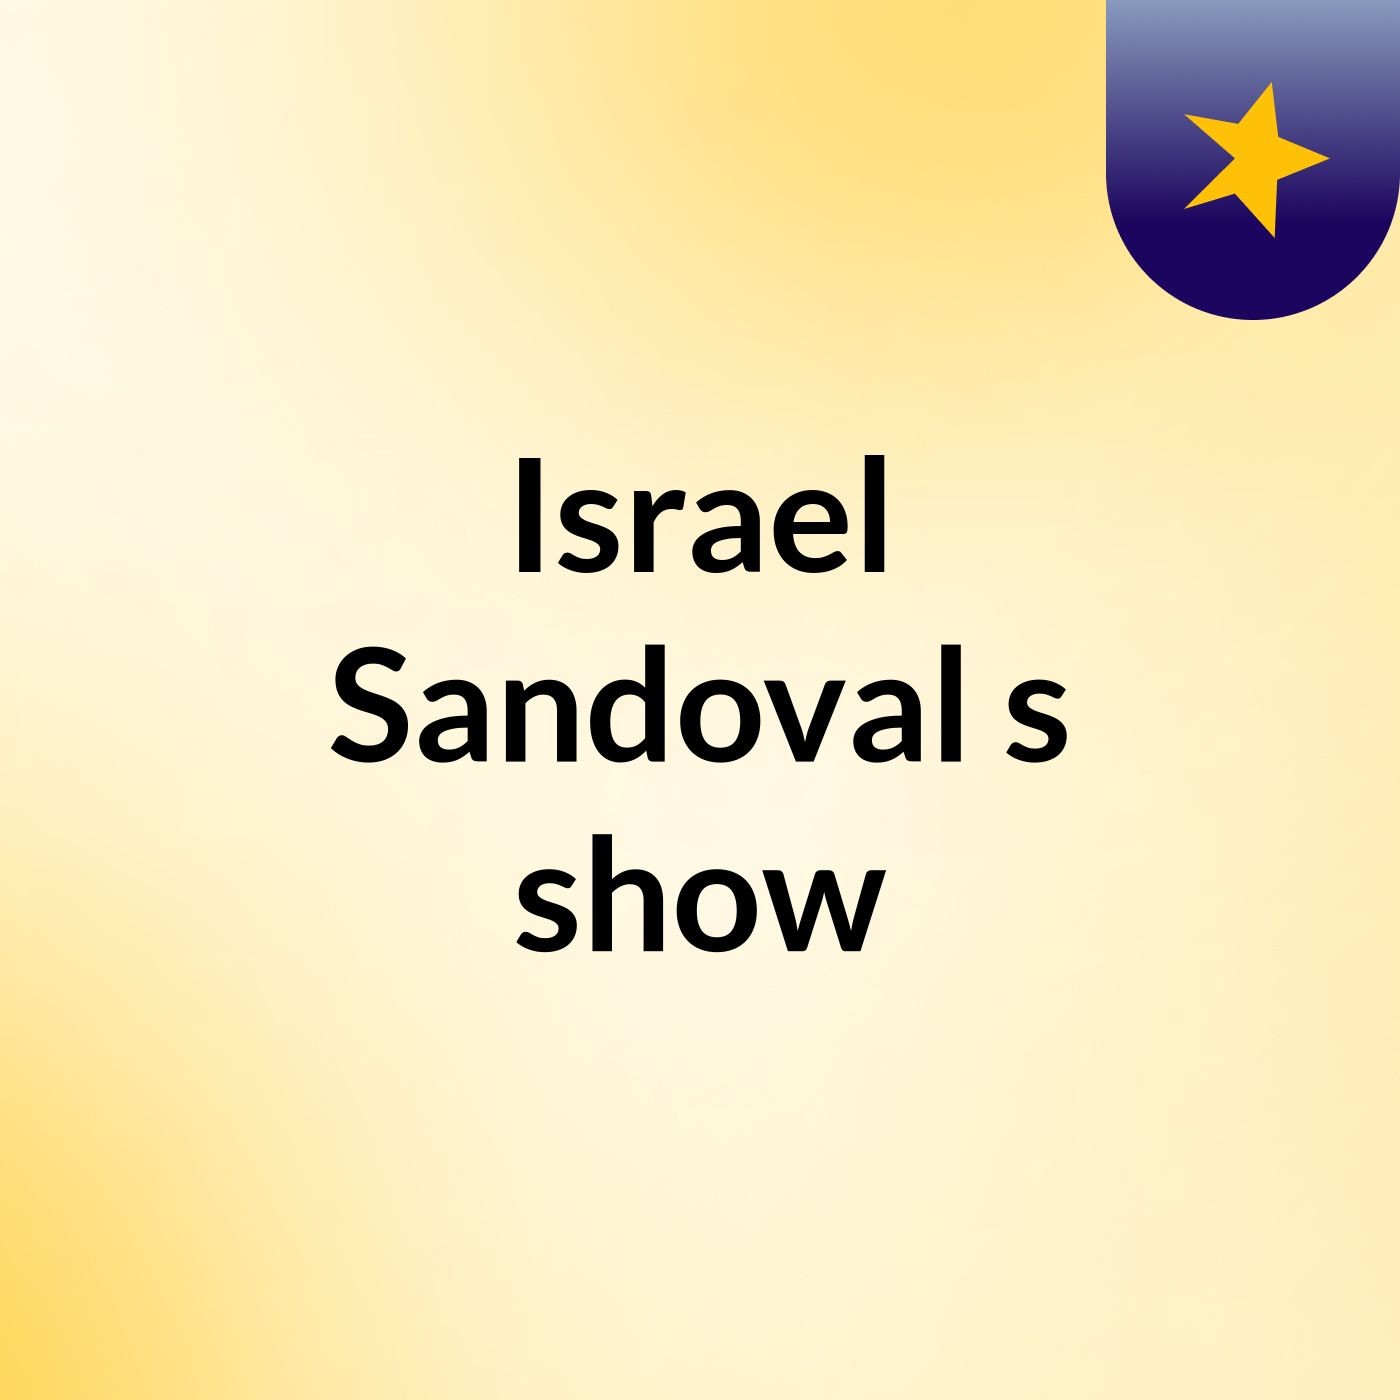 Israel Sandoval's show